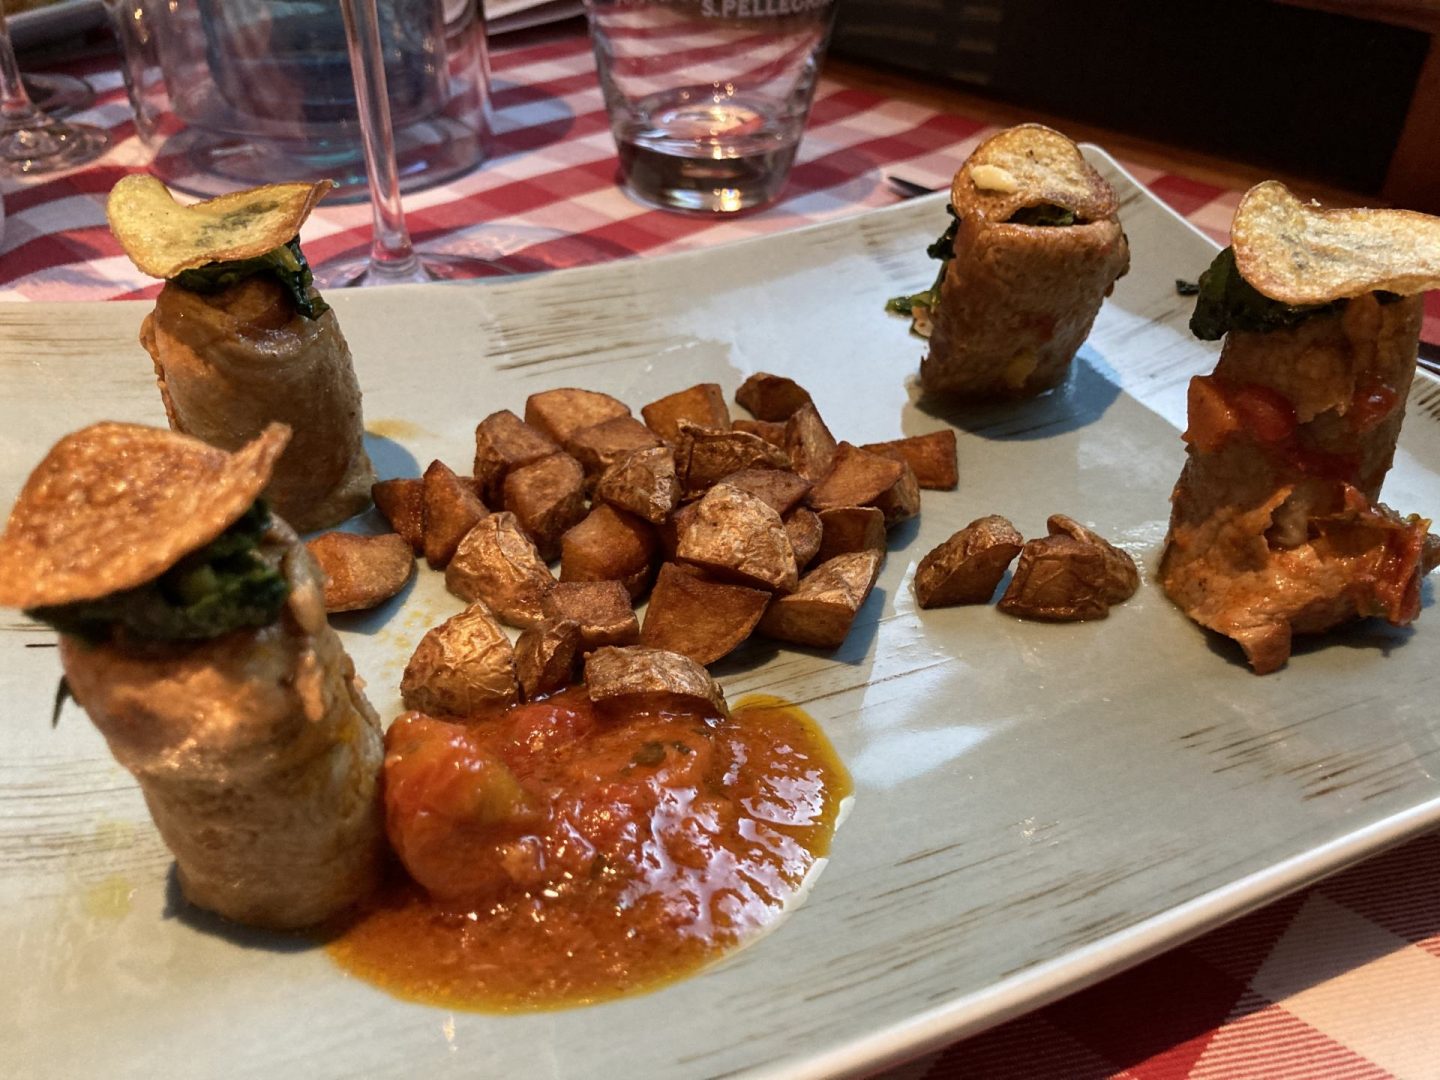 Erfahrung Bewertung Kritik Trattoria Puglia Castrop-Rauxel Menükarussell Involtini Tomatensoße Kartoffeln Foodblog Sternestulle